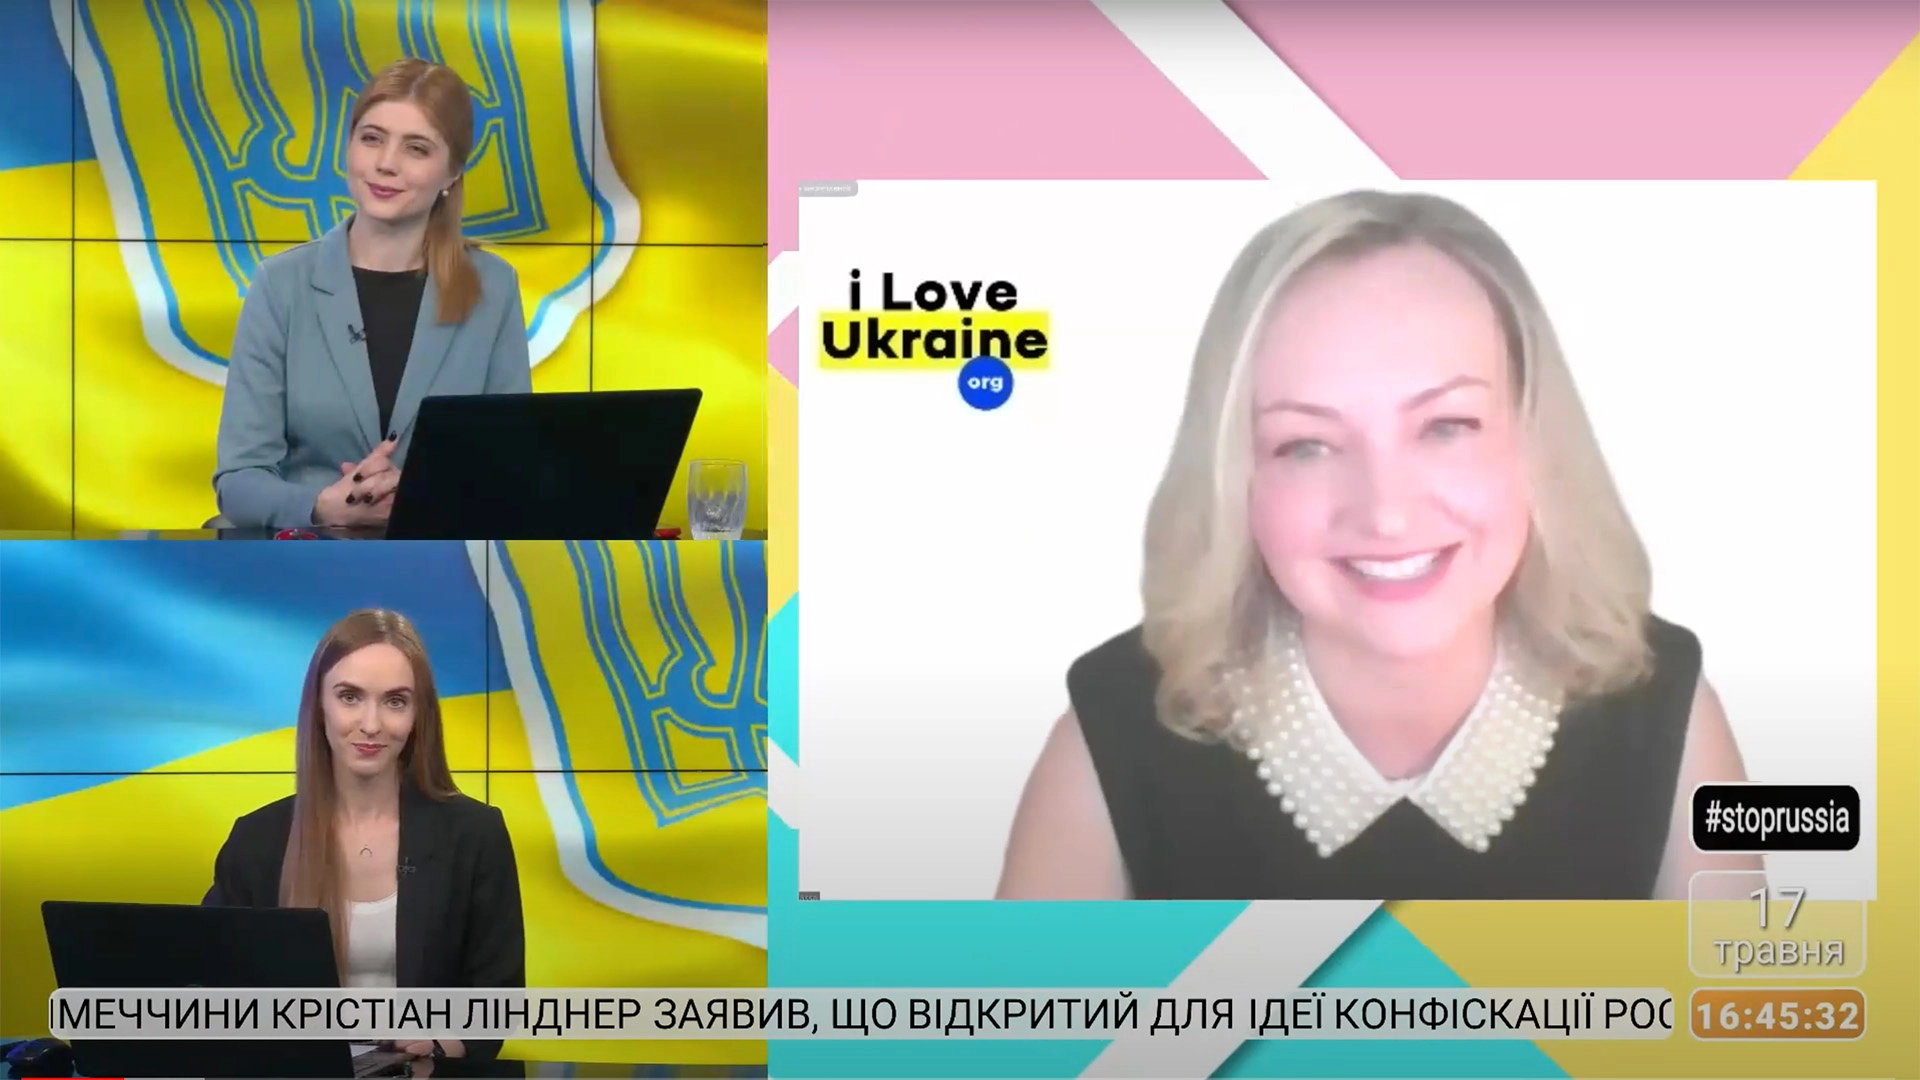 iLoveUkraine interview on Ukrainian television about about a humanitarian aid shipment that arrived in Khemelnitskiy, Ukraine.